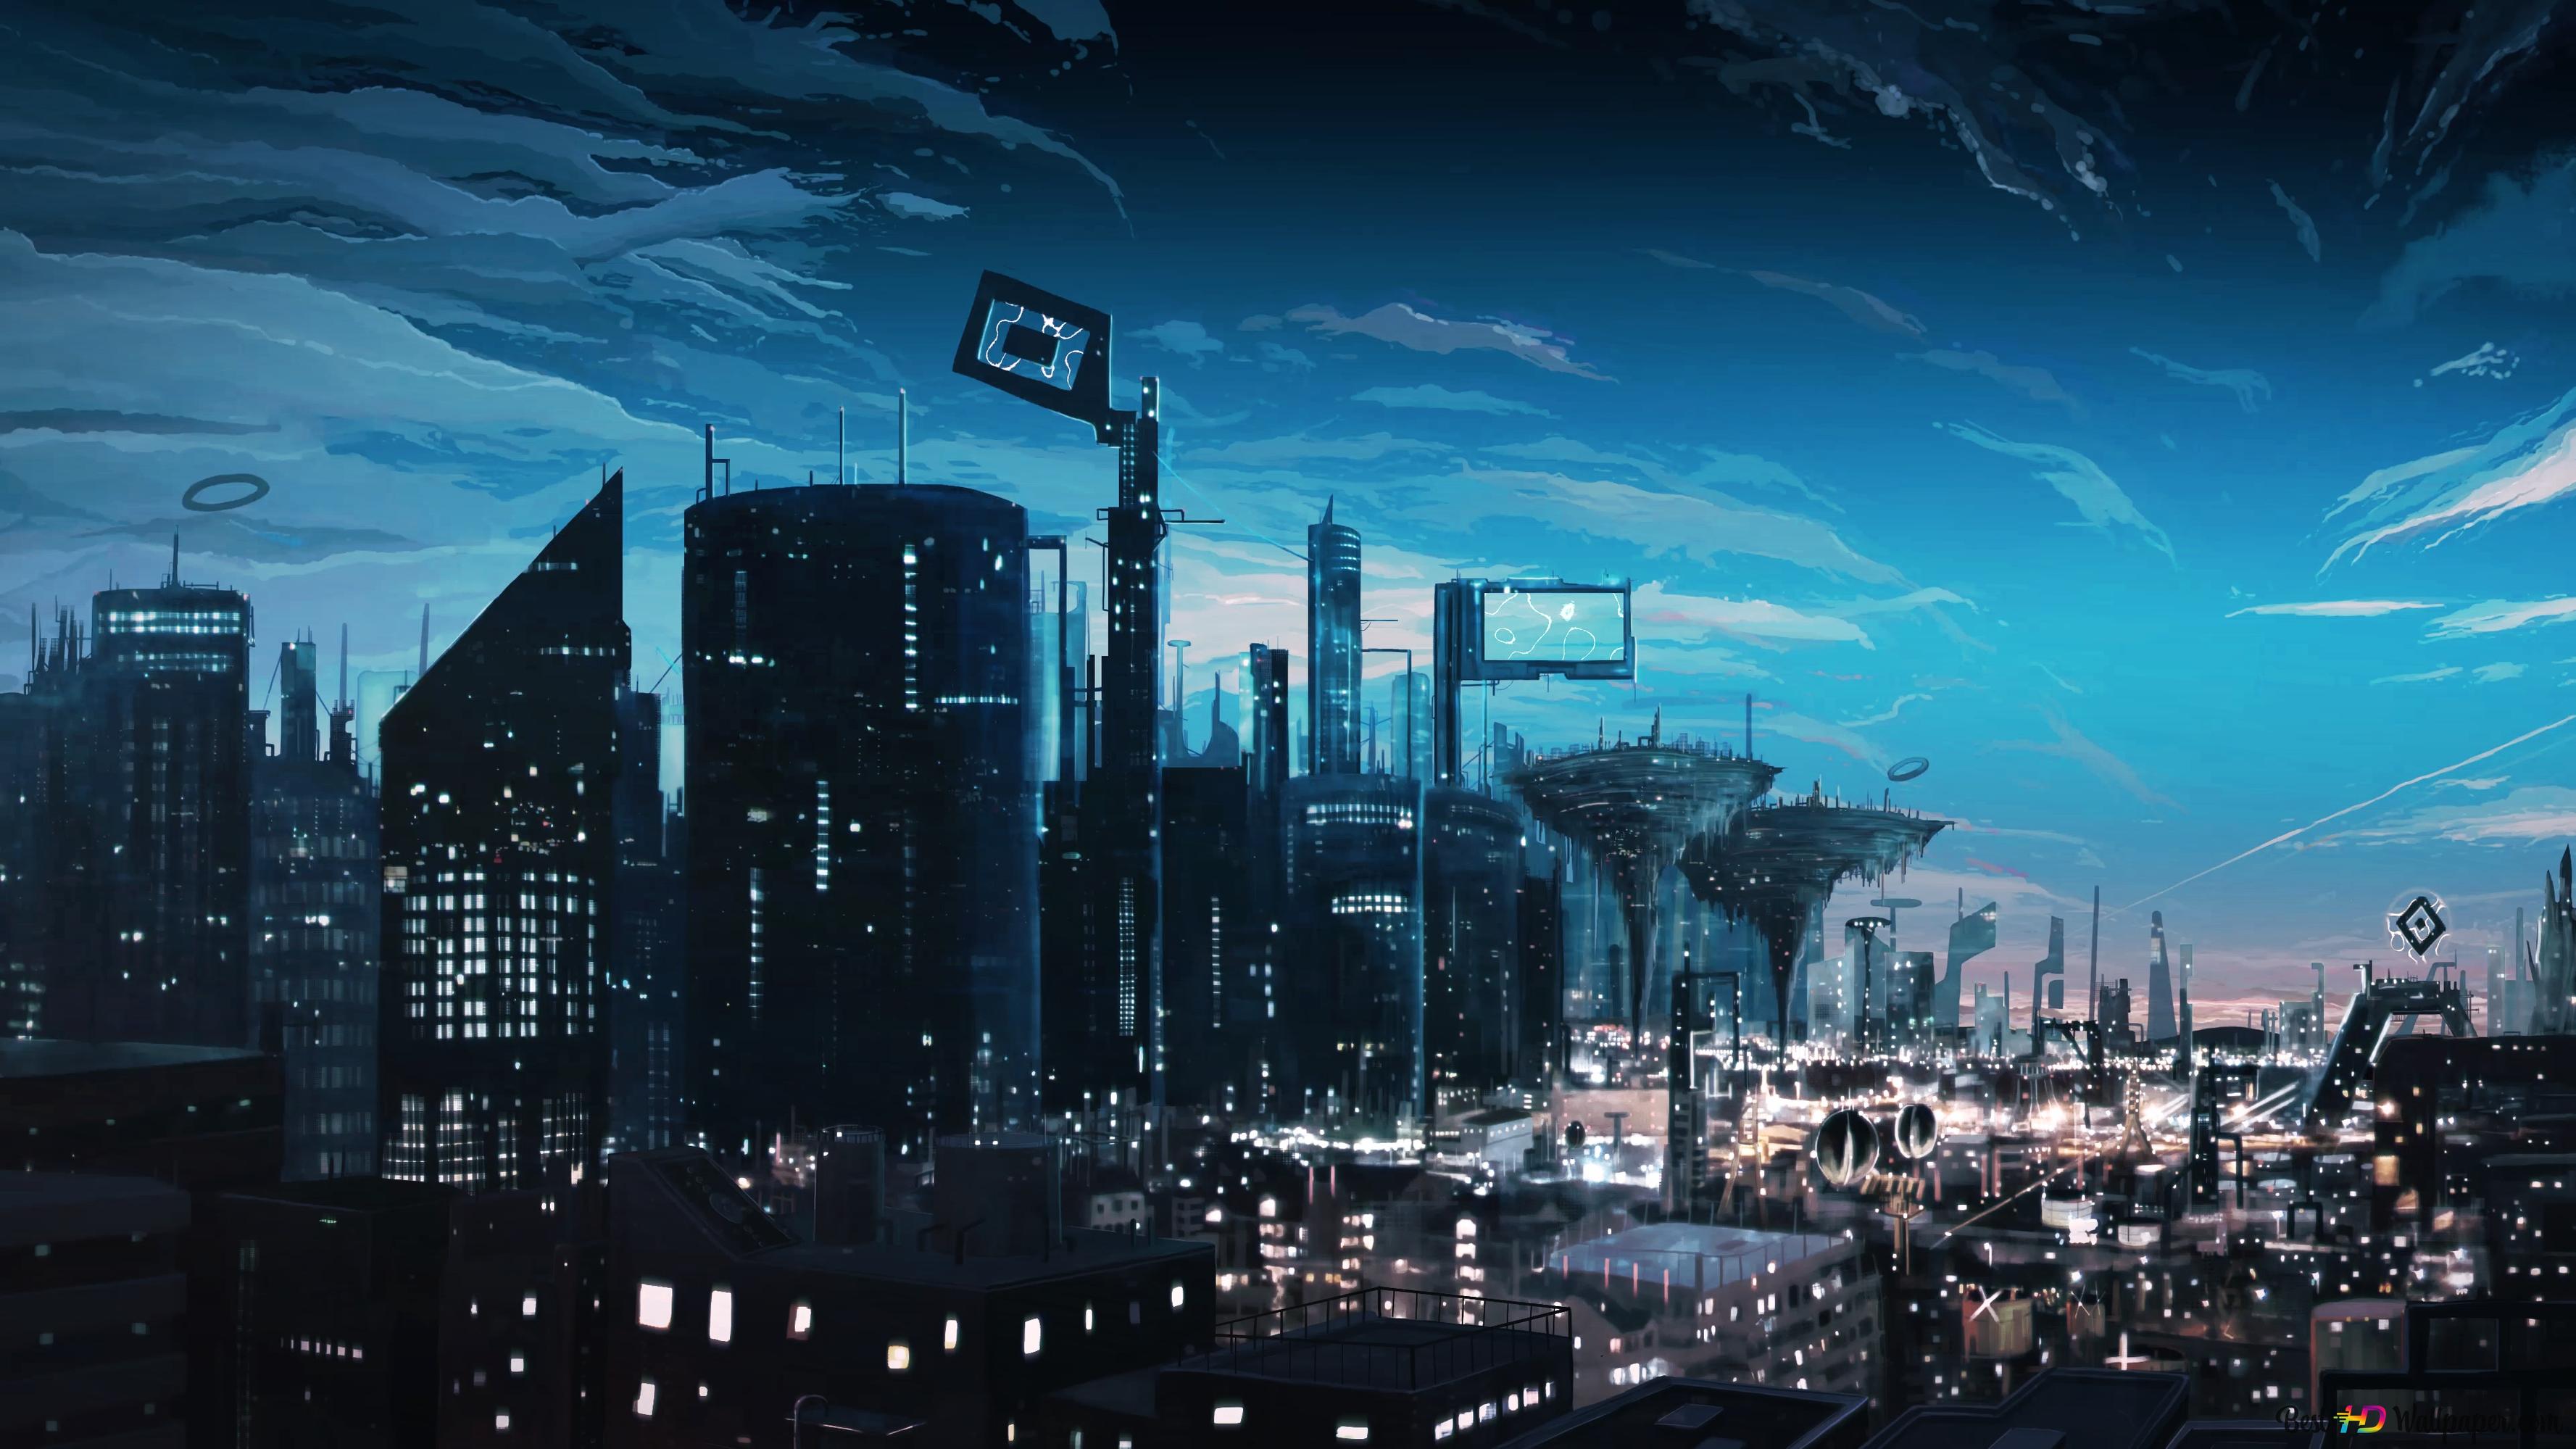 Cyber Machines City 4K wallpaper download